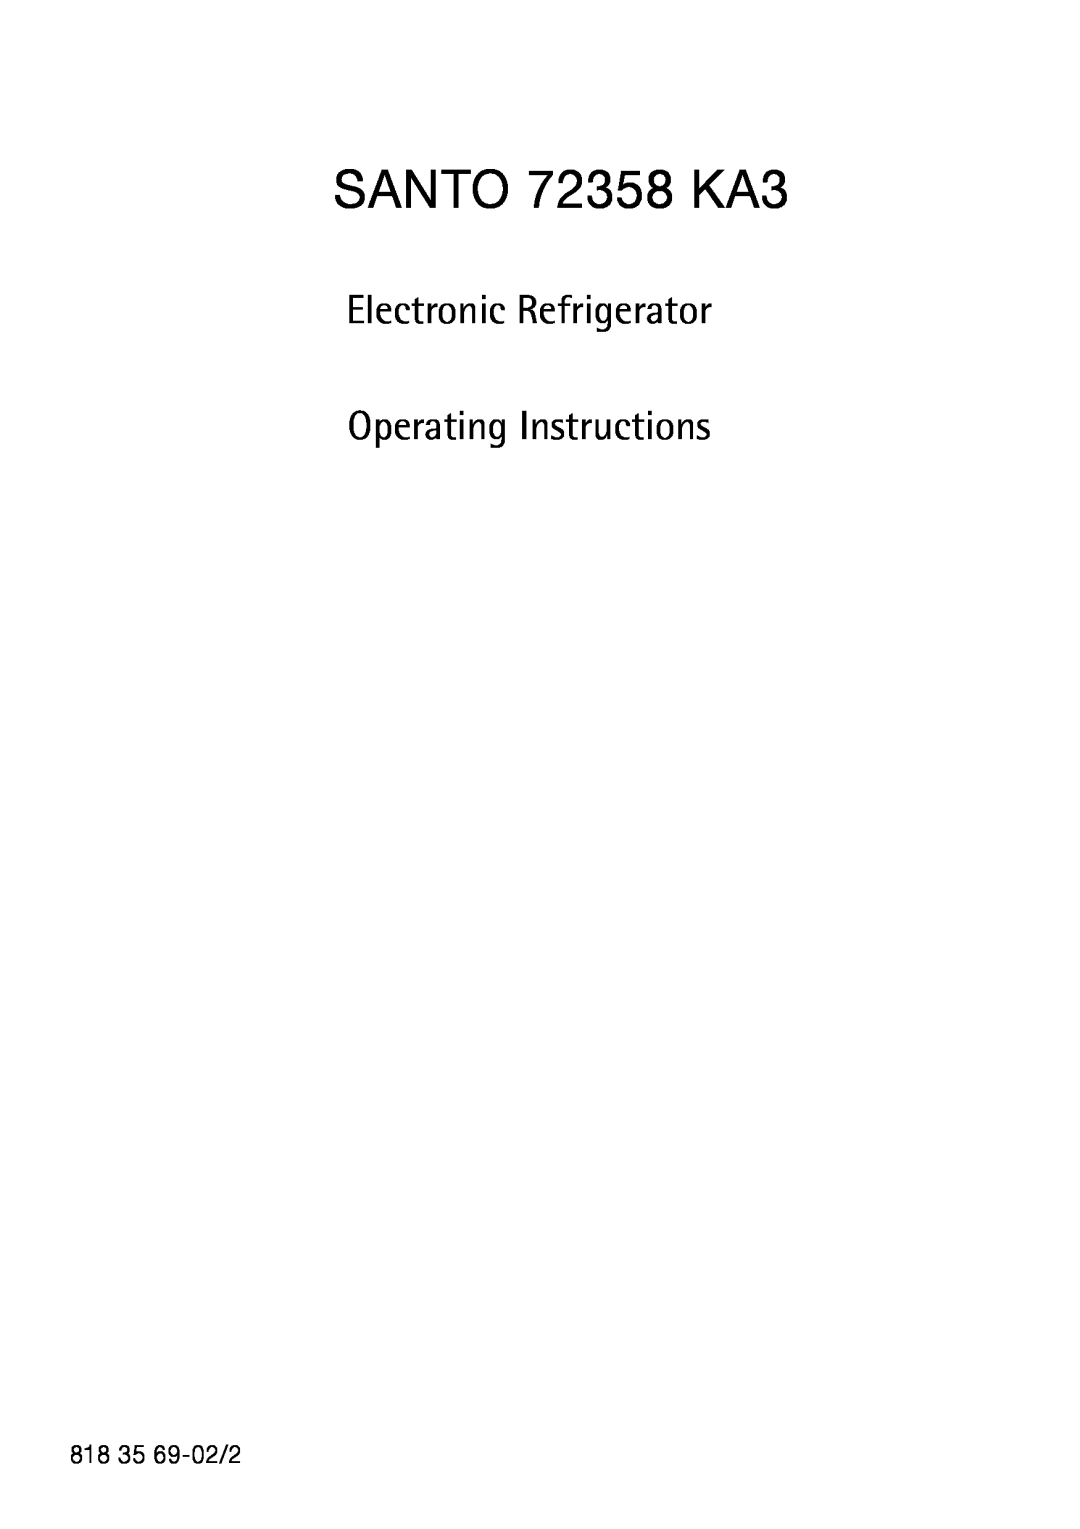 AEG S75578KG3 manual SANTO 72358 KA3, Electronic Refrigerator Operating Instructions 